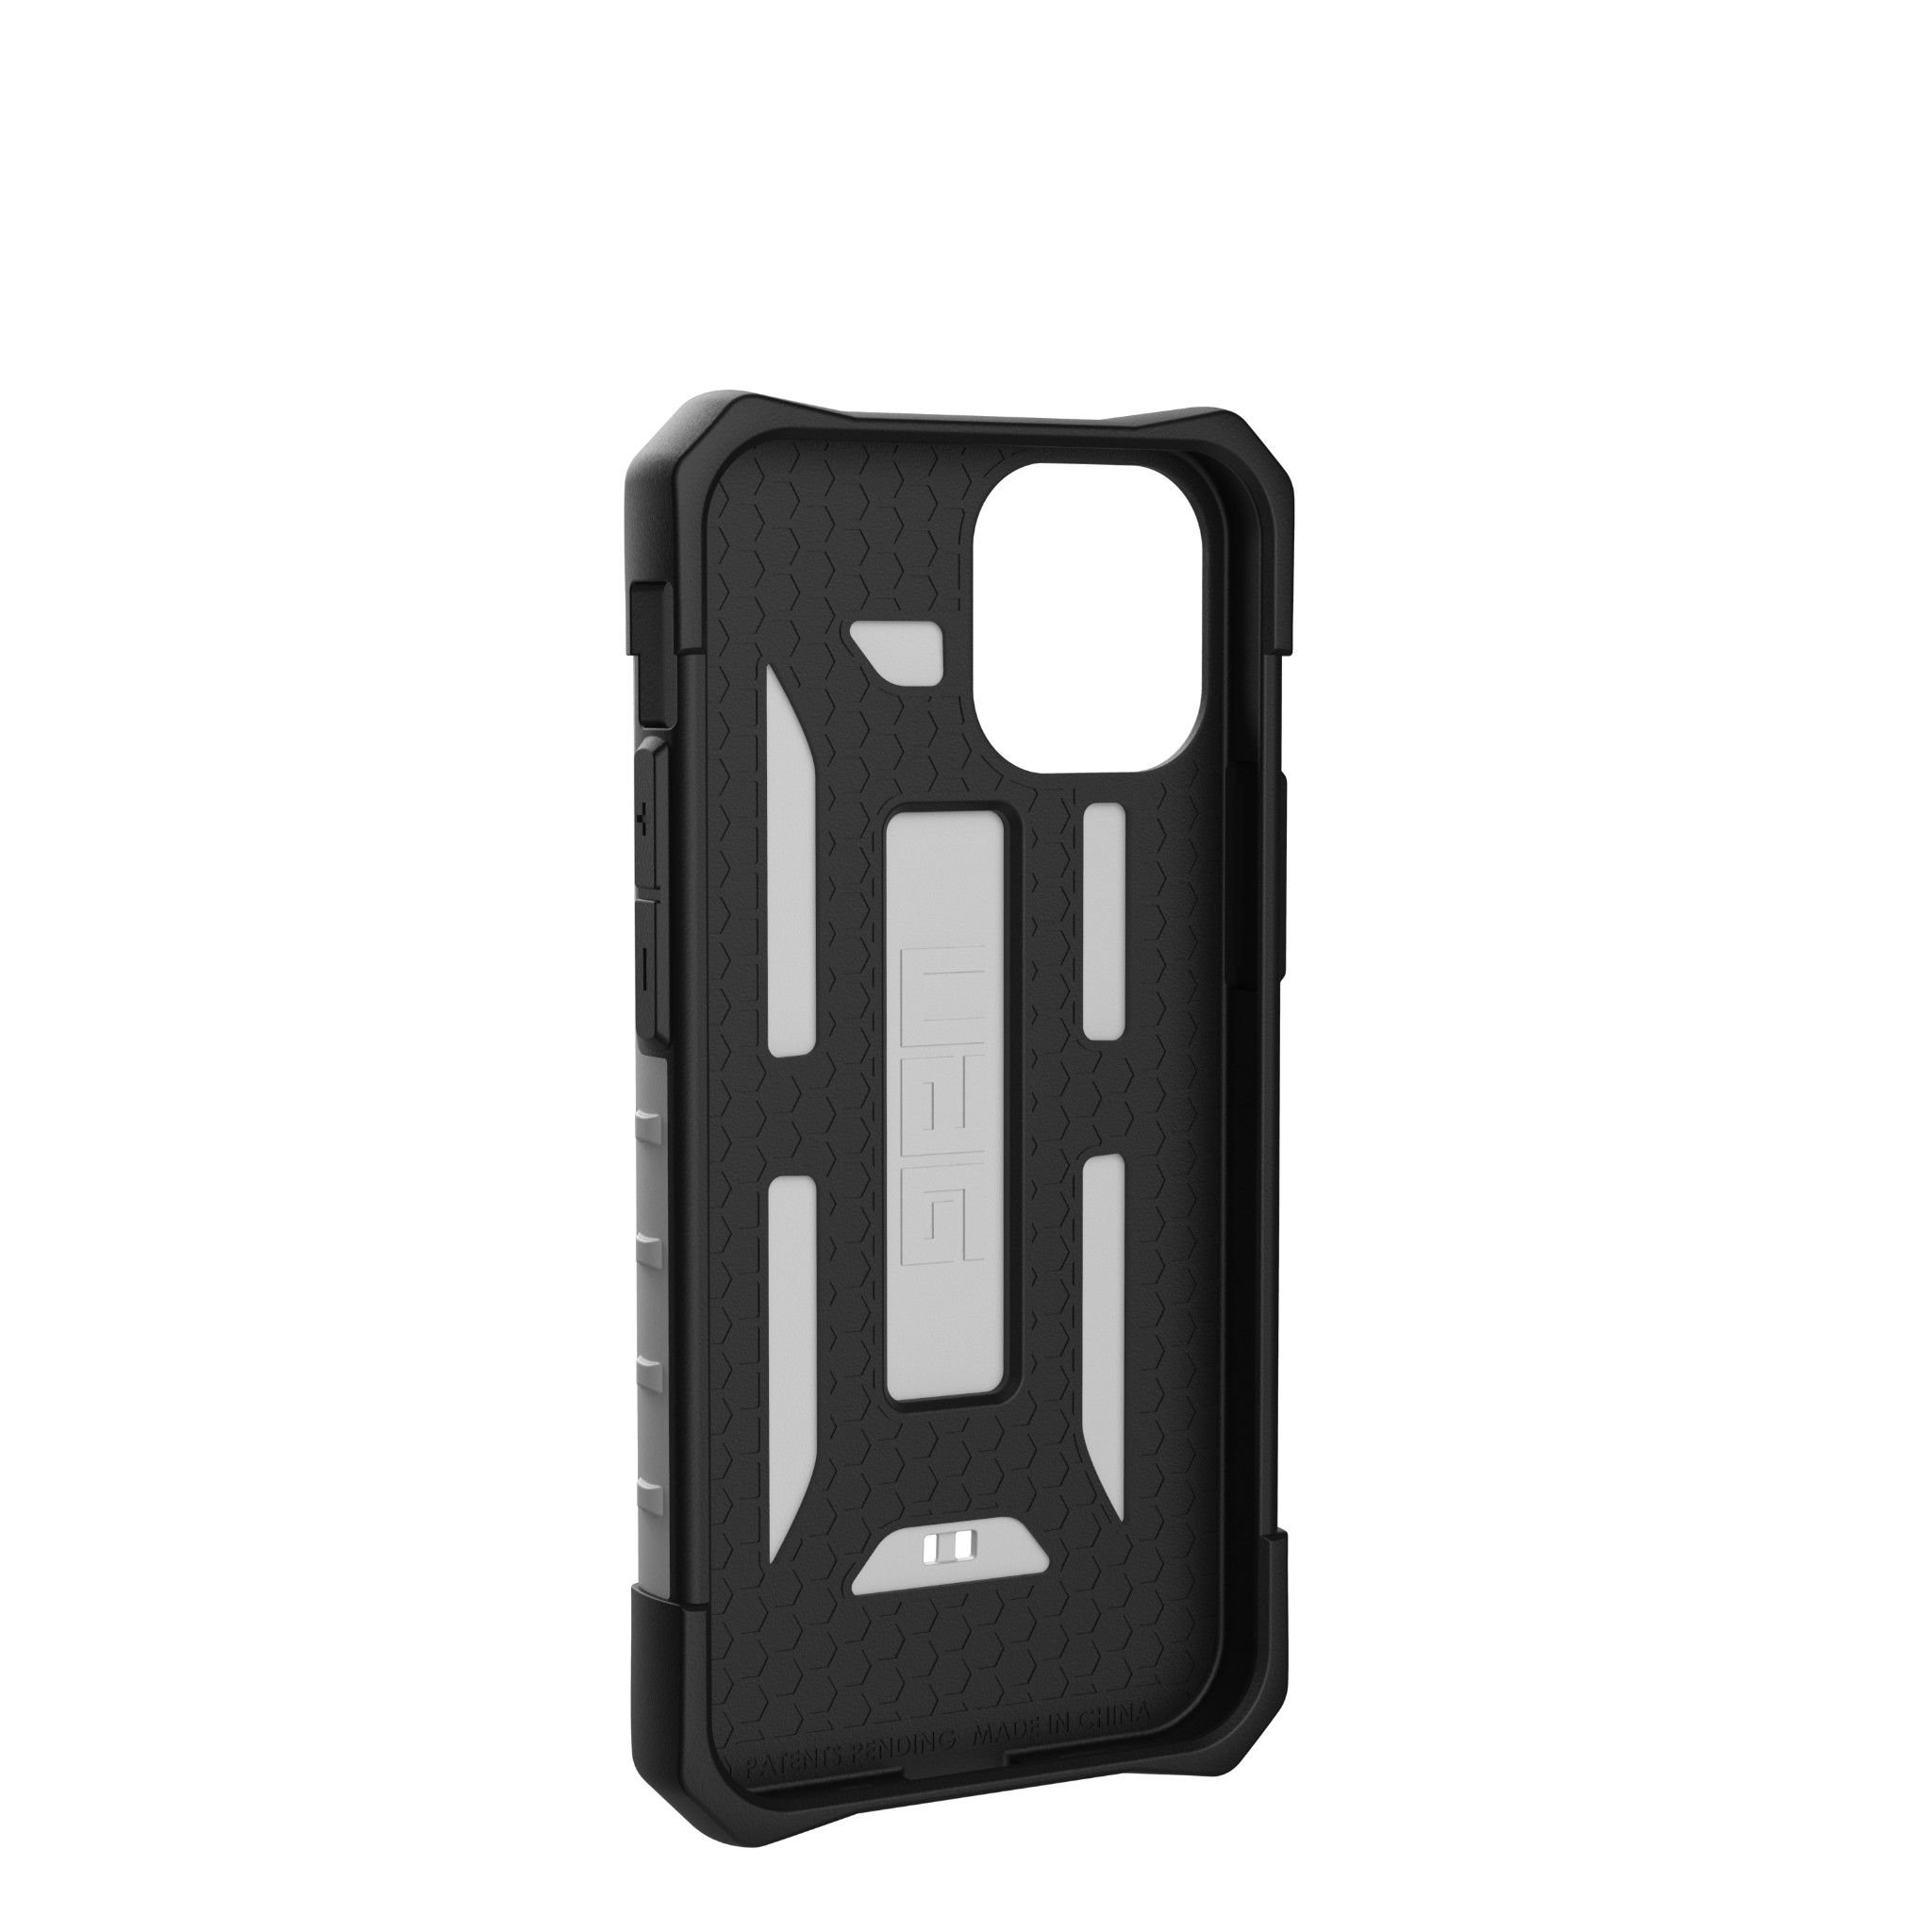  Ốp lưng Pathfinder cho iPhone 12 Mini [5.4 inch] 